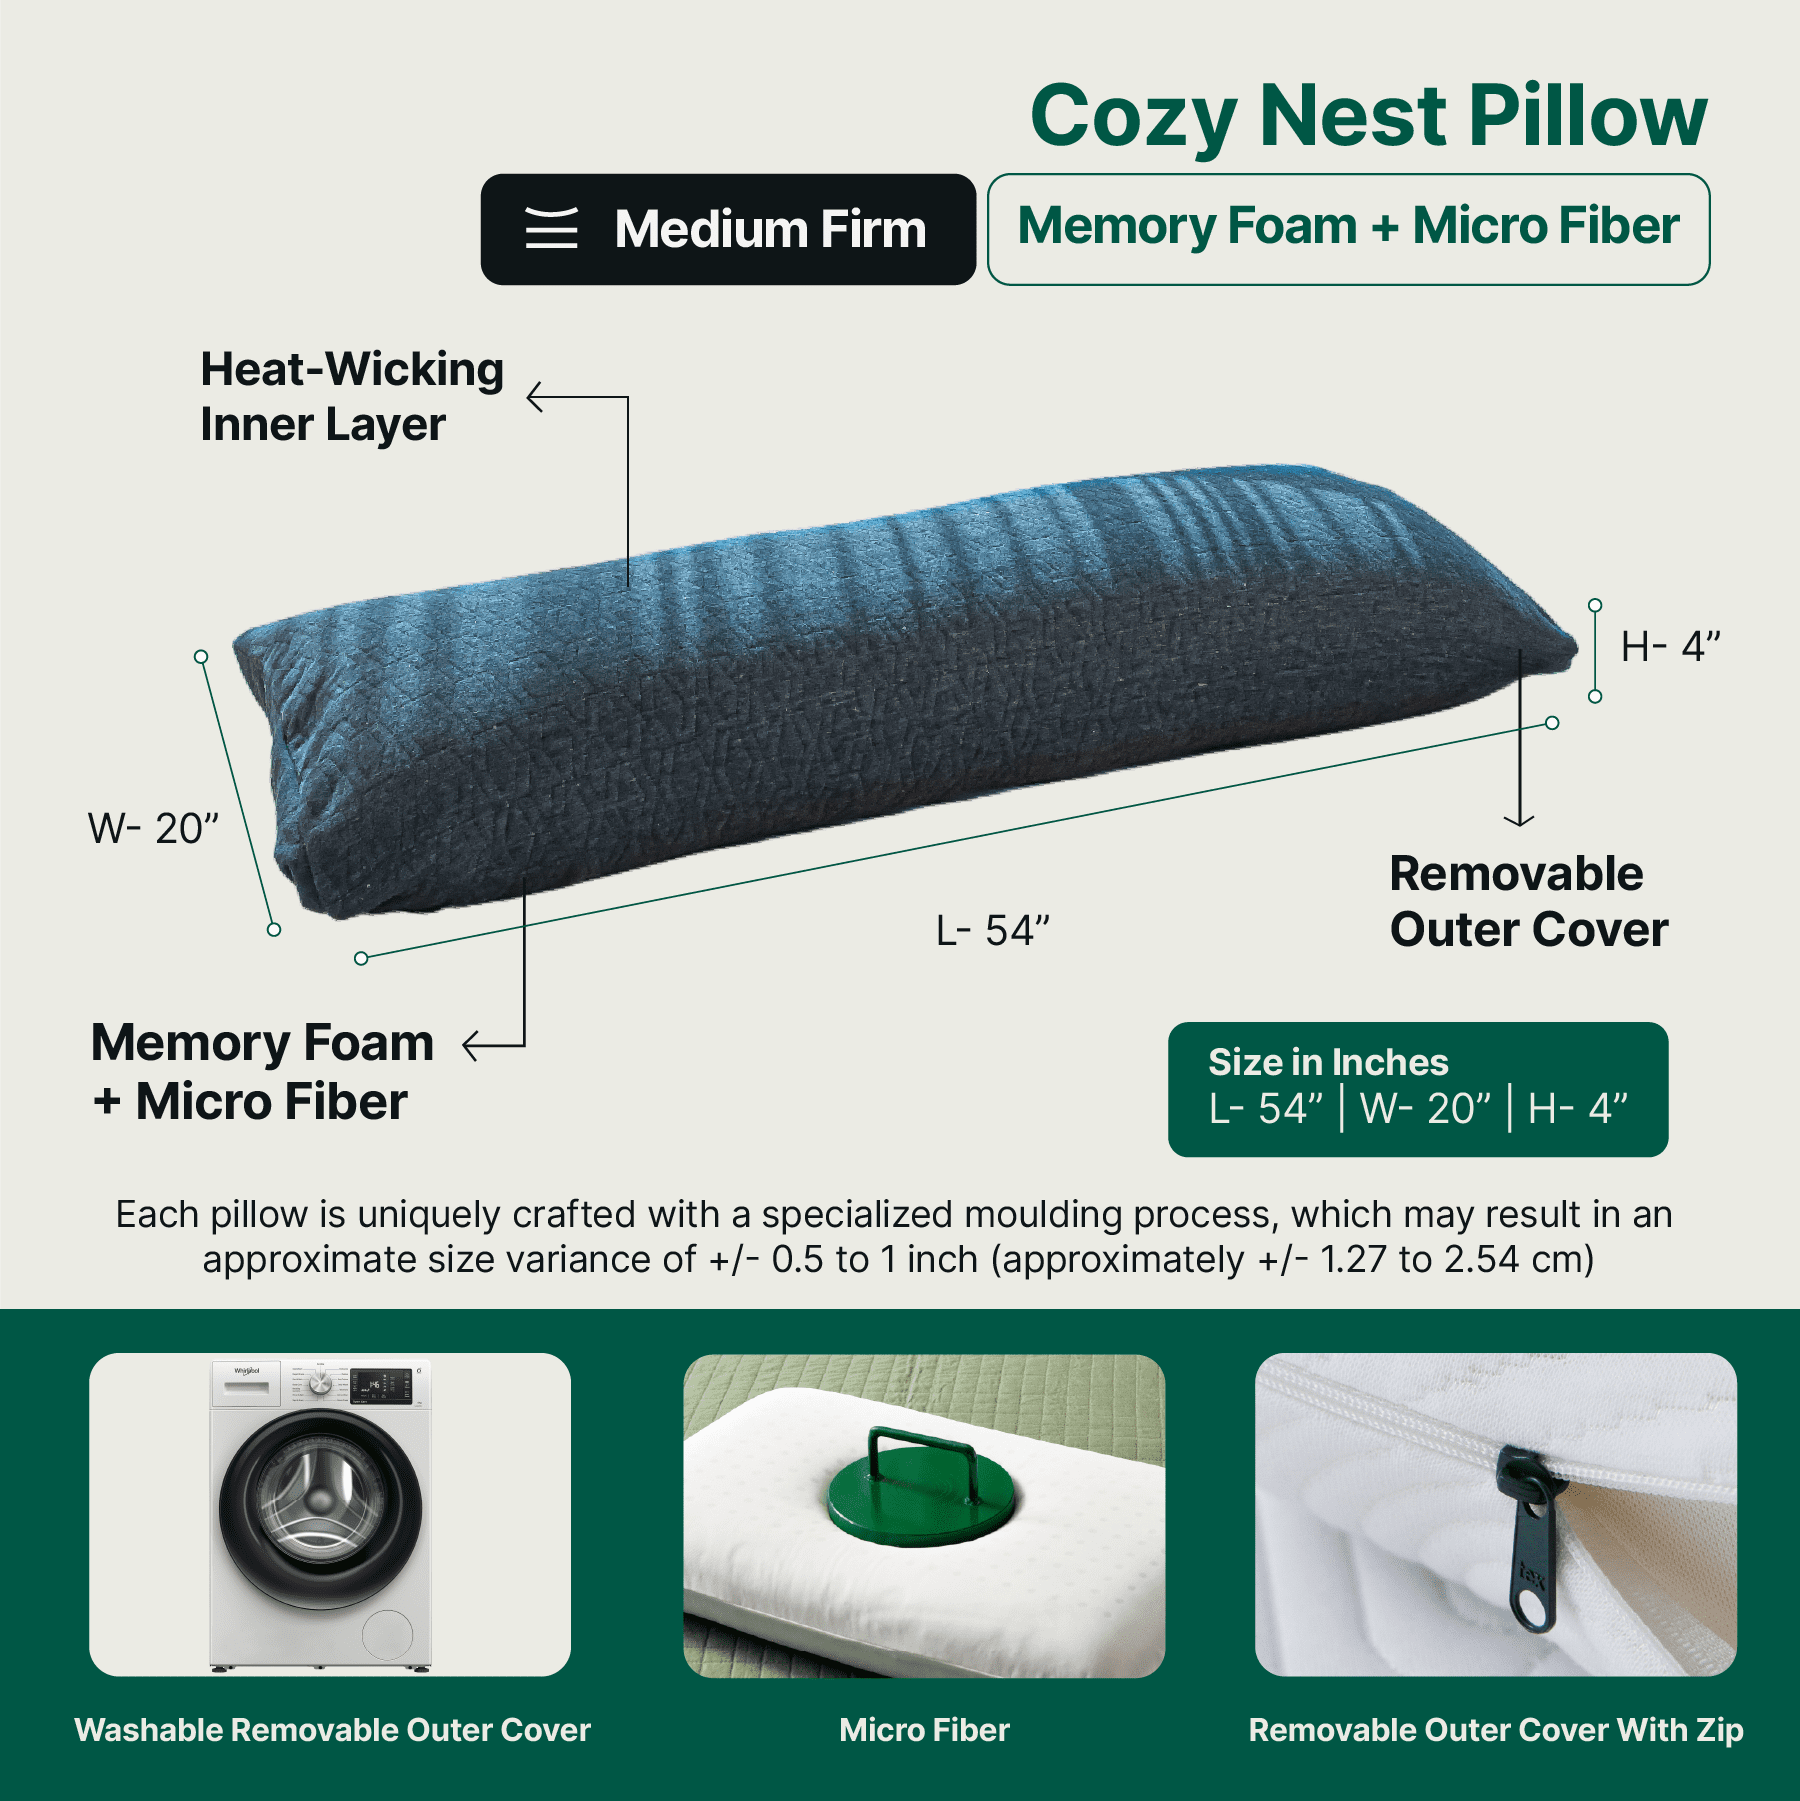 Haze - Memory Foam & Micro Fiber Full Body Pillow - Medium Firm Body Pillow The White Willow 